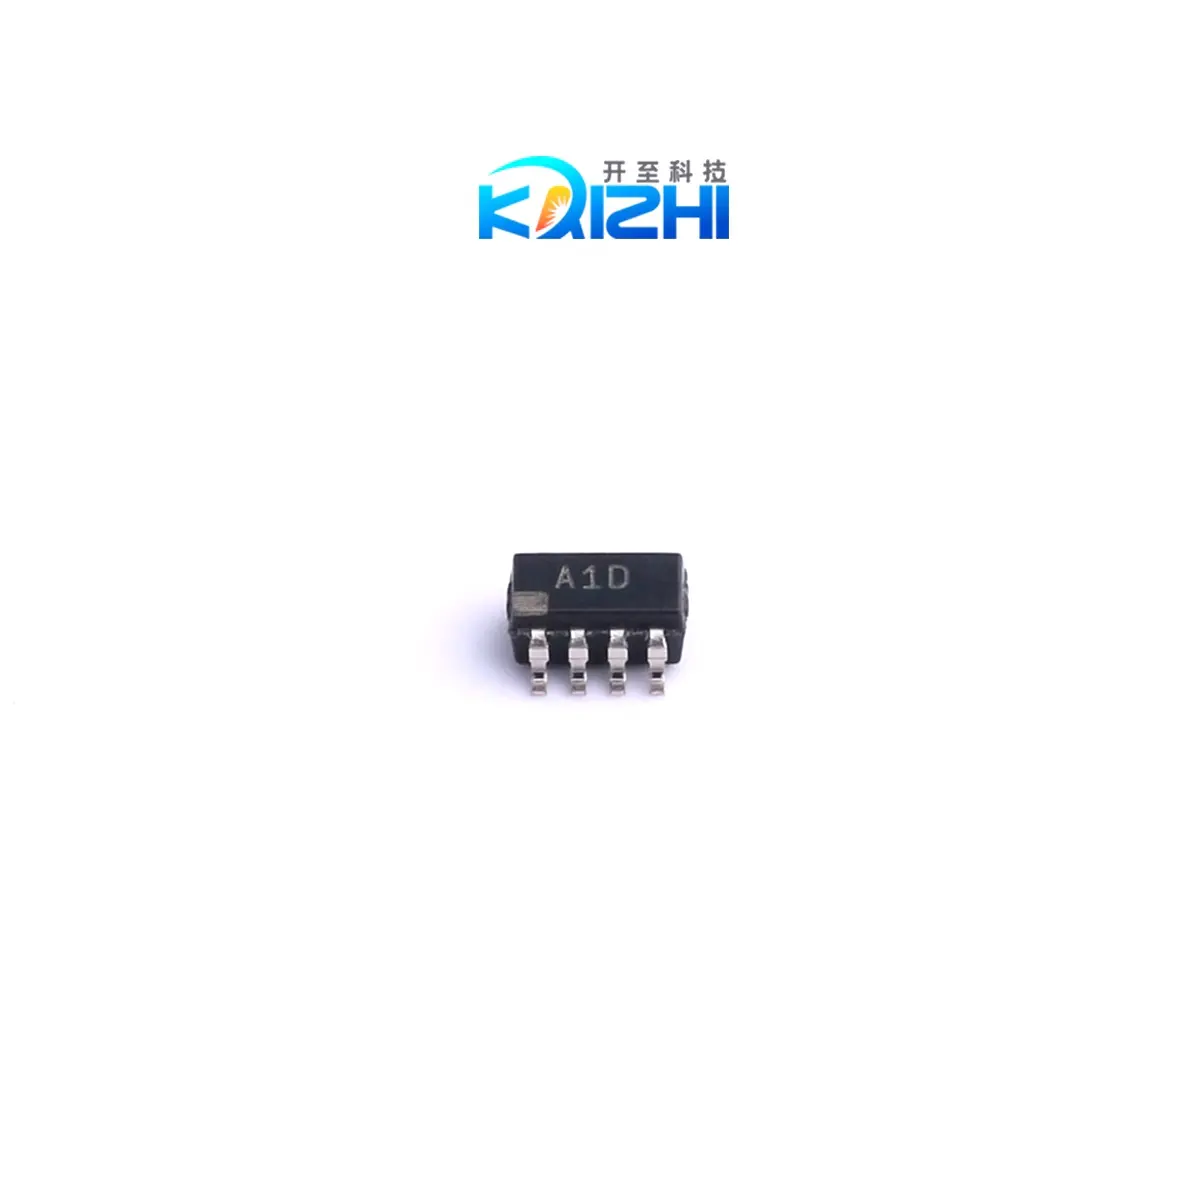 Chip ic ad8502 amplificador de elemento linear sot-23 AD8502ARJZ-REEL7, em estoque